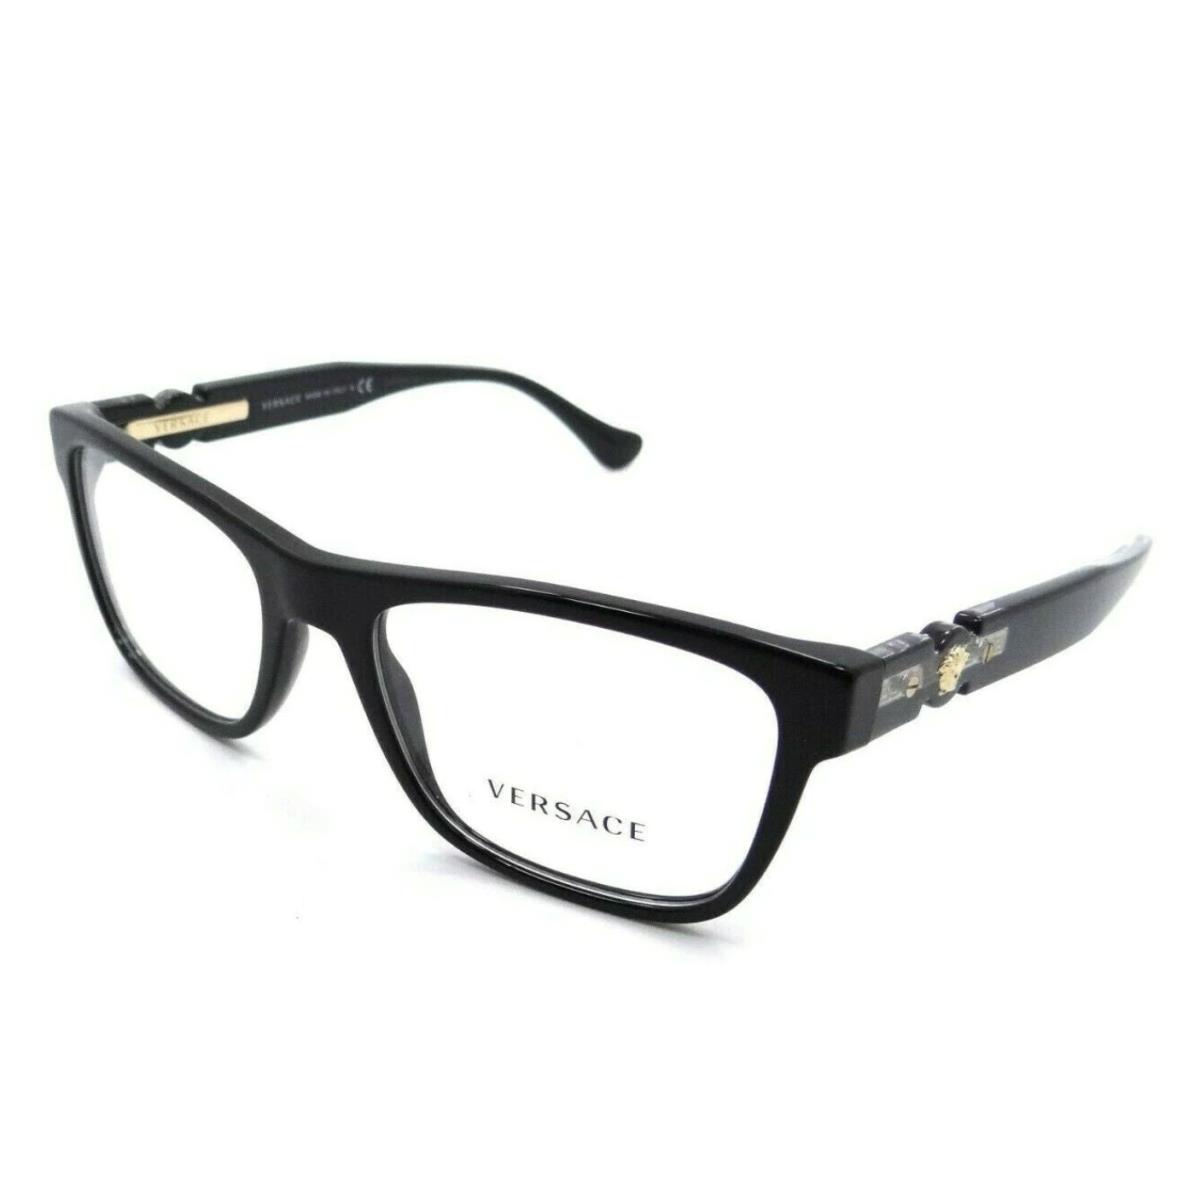 Versace Eyeglasses Mod. 3303 GB1 55-18 140 Black on Crystal Gold Frames - Shiny Black , Black & Gold Frame, Demos with Logo Imrint Lens